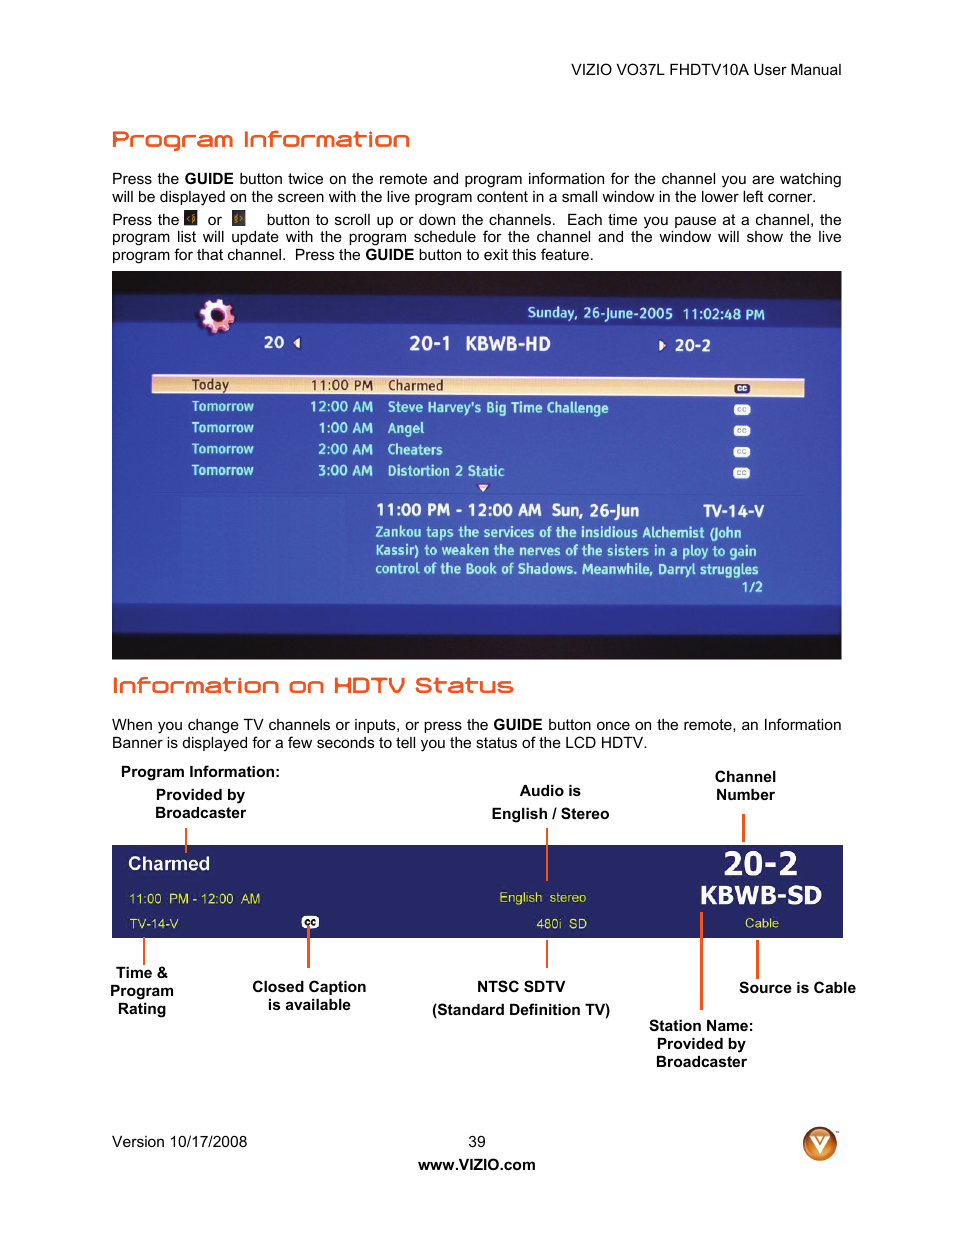 Program information, Information on hdtv status | Vizio VO37L FHDTV10A User Manual | Page 39 / 80